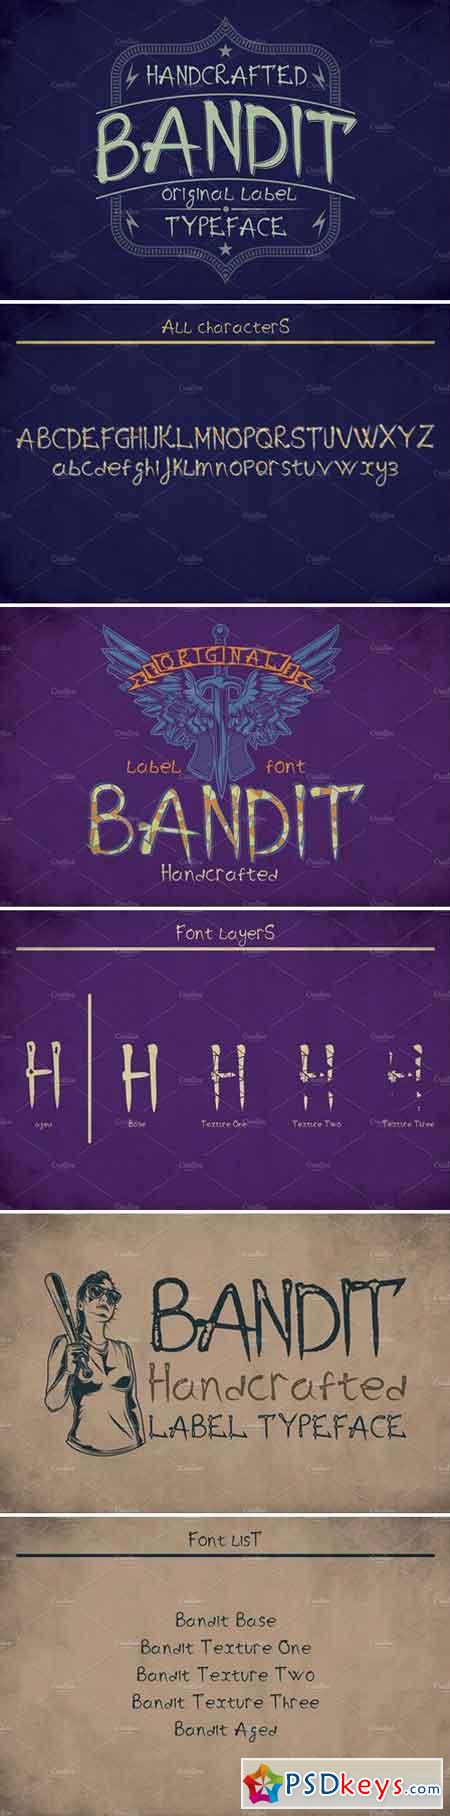 Bandit Modern Label Typeface 2185207